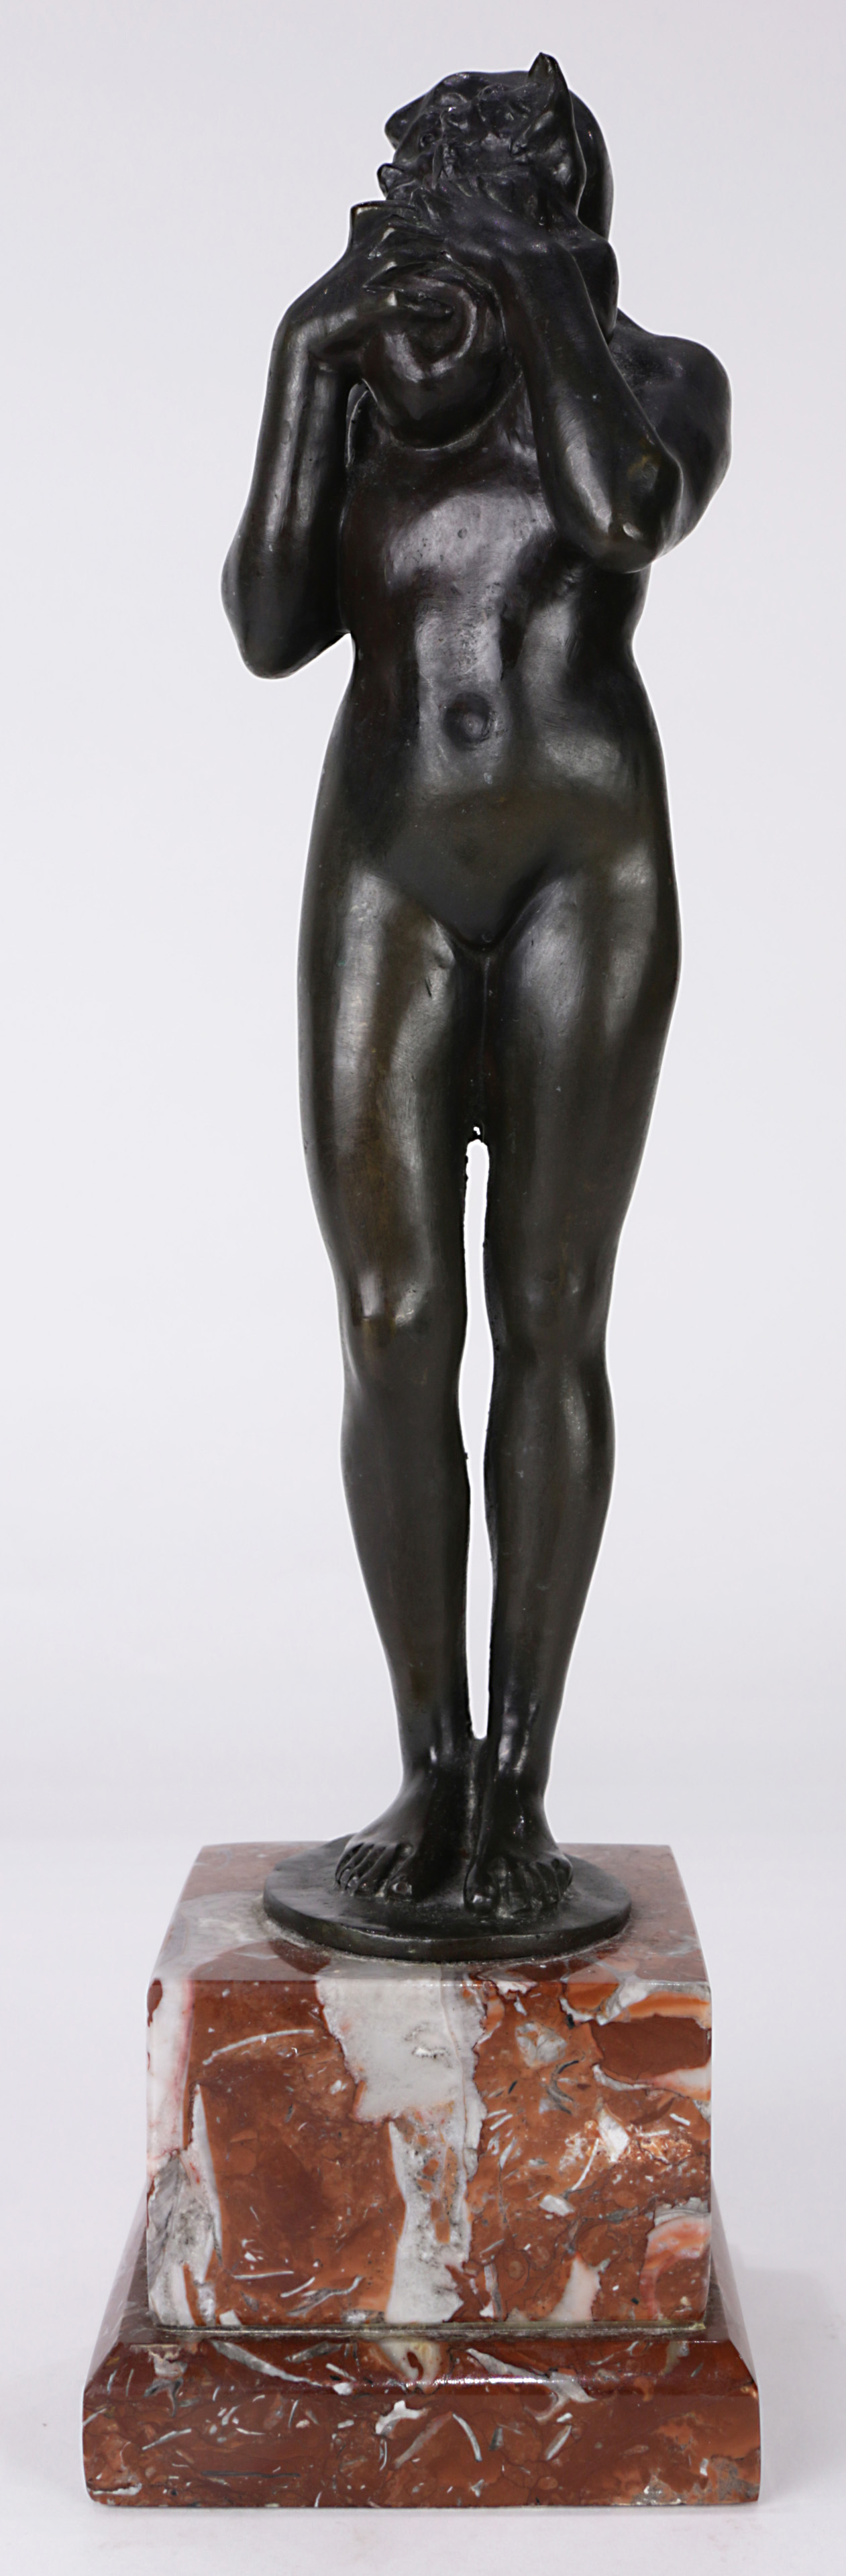 A French Art Nouveau style patinated bronze sculpture